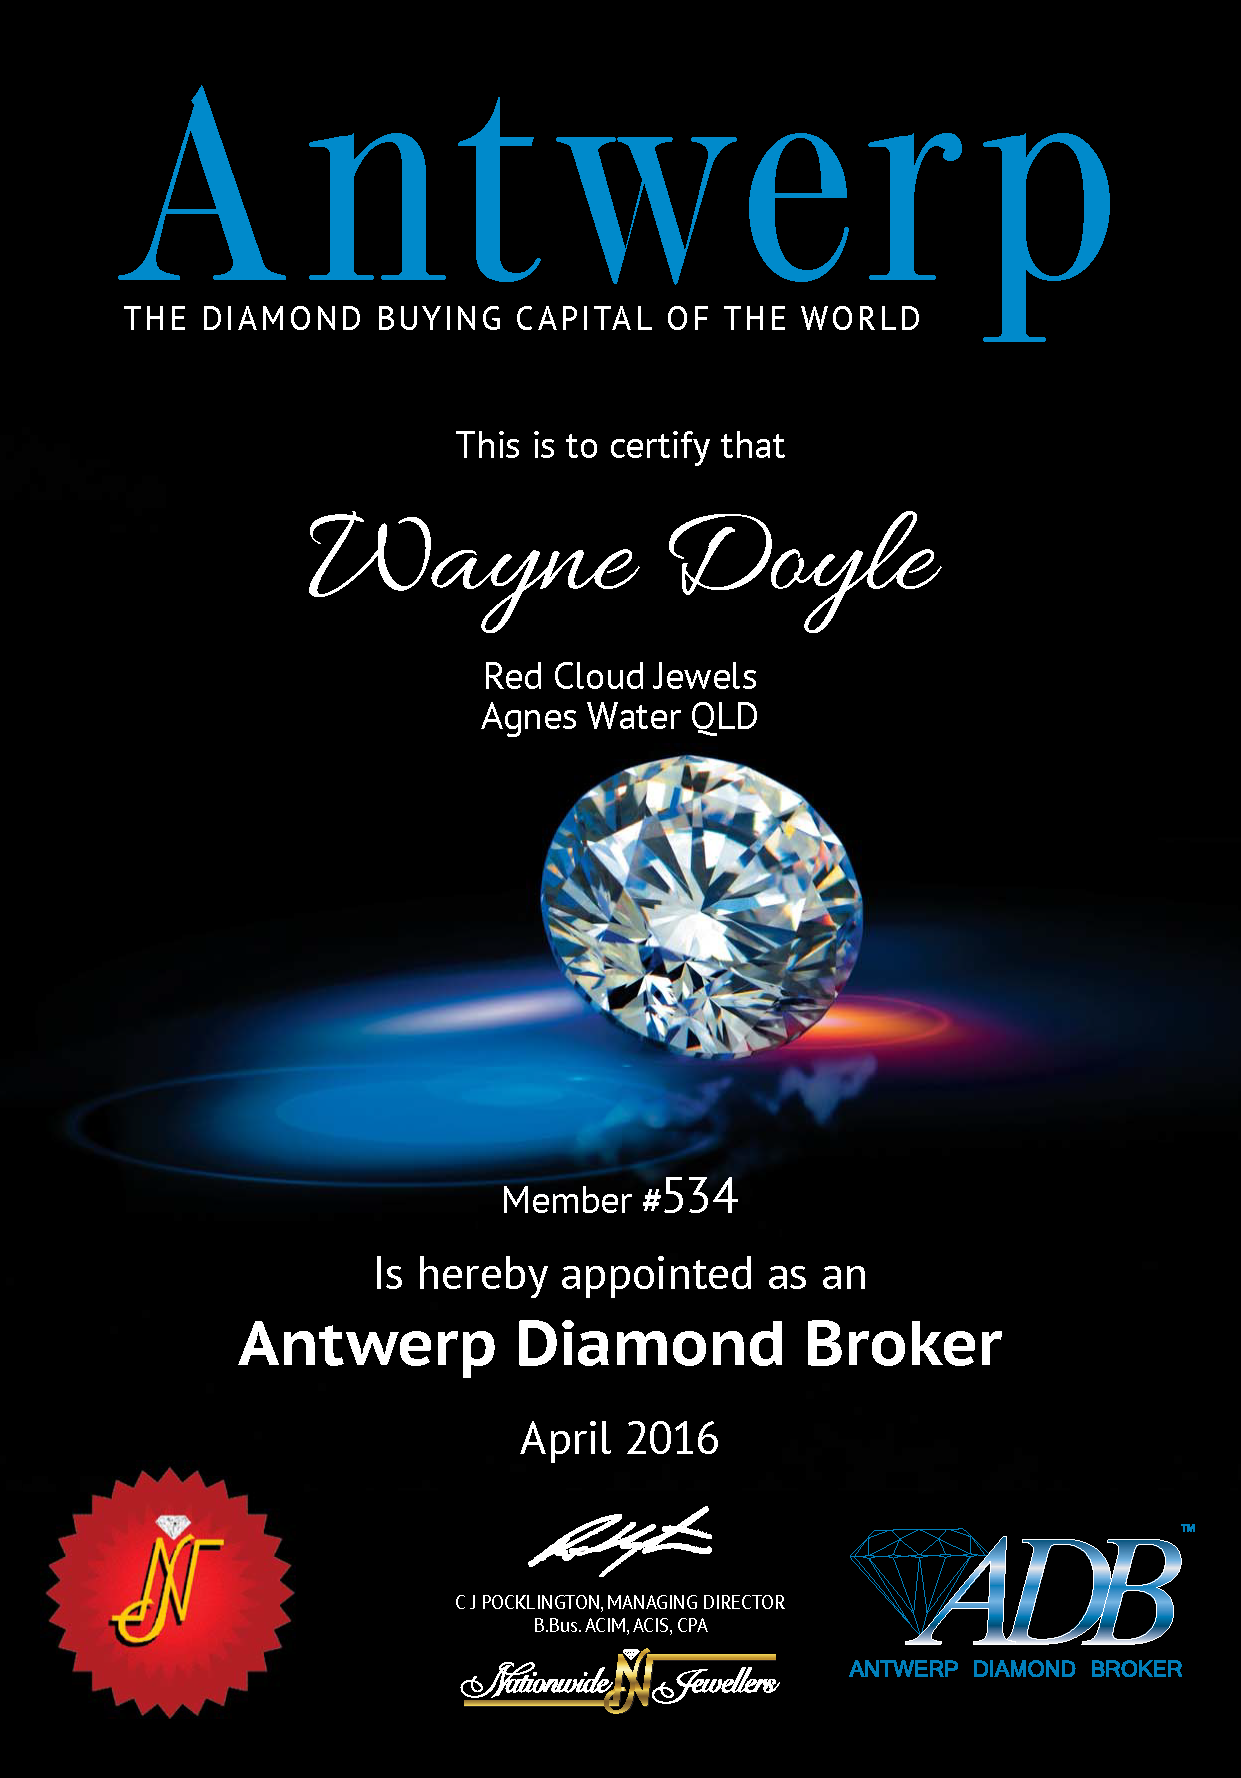 Antwerp Diamond Broker Certificate - Red Cloud Jewels